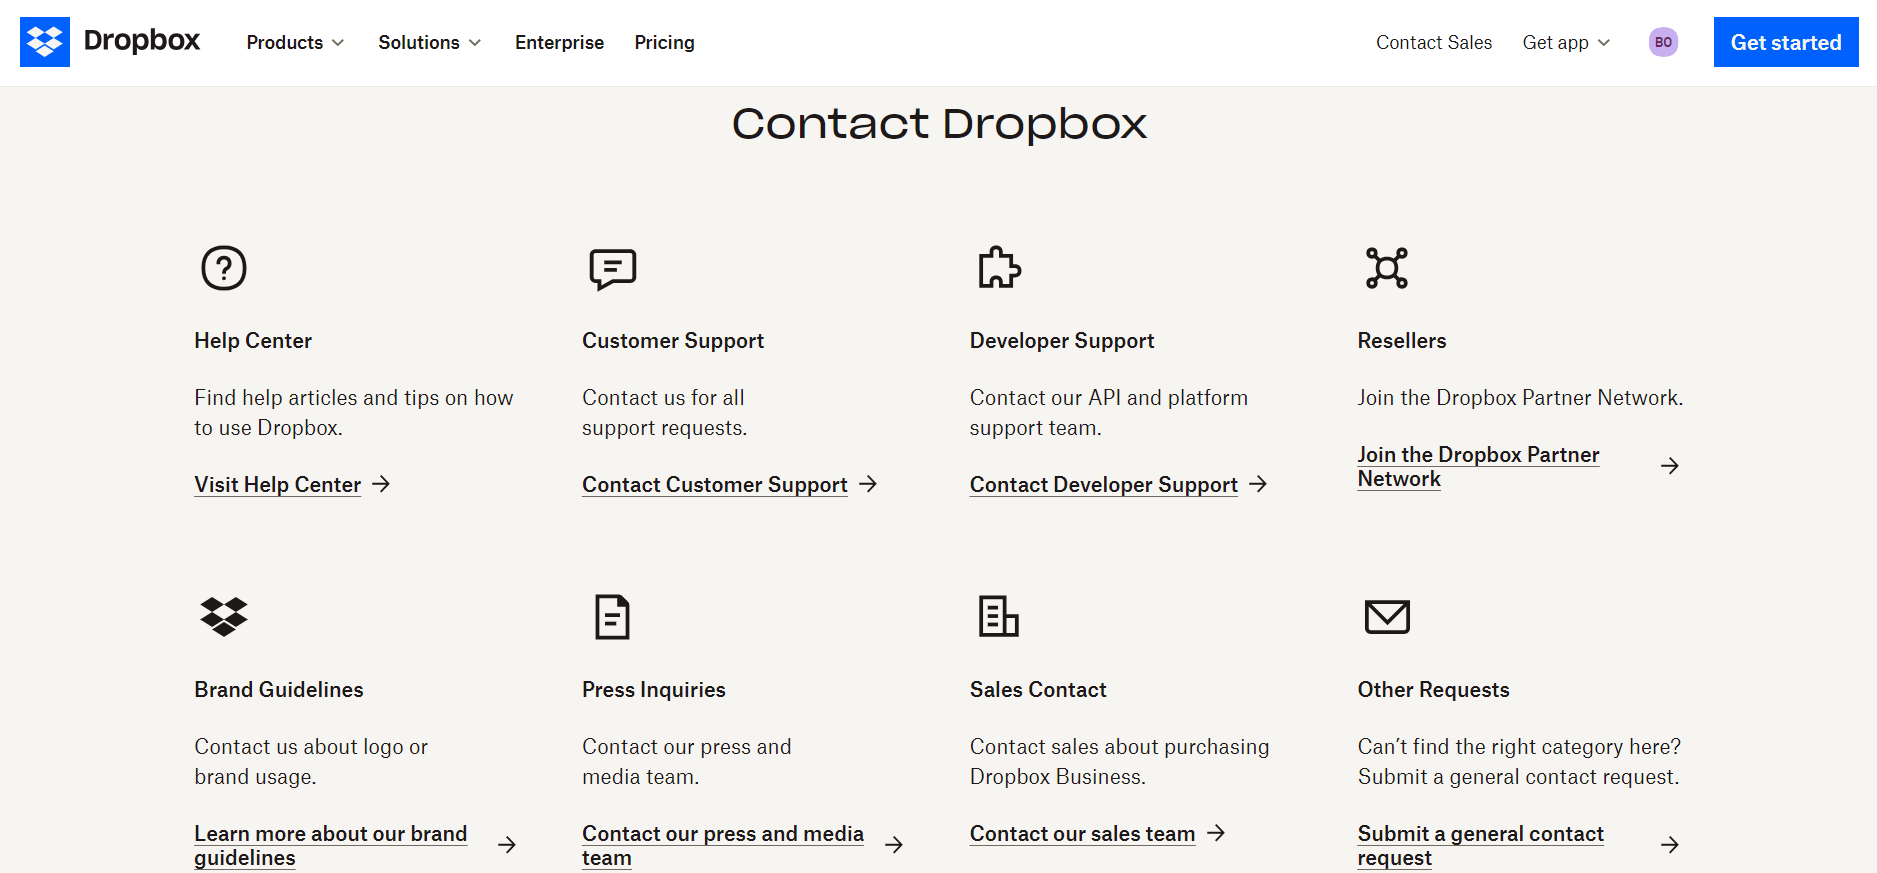 Dropbox Contact Us Page